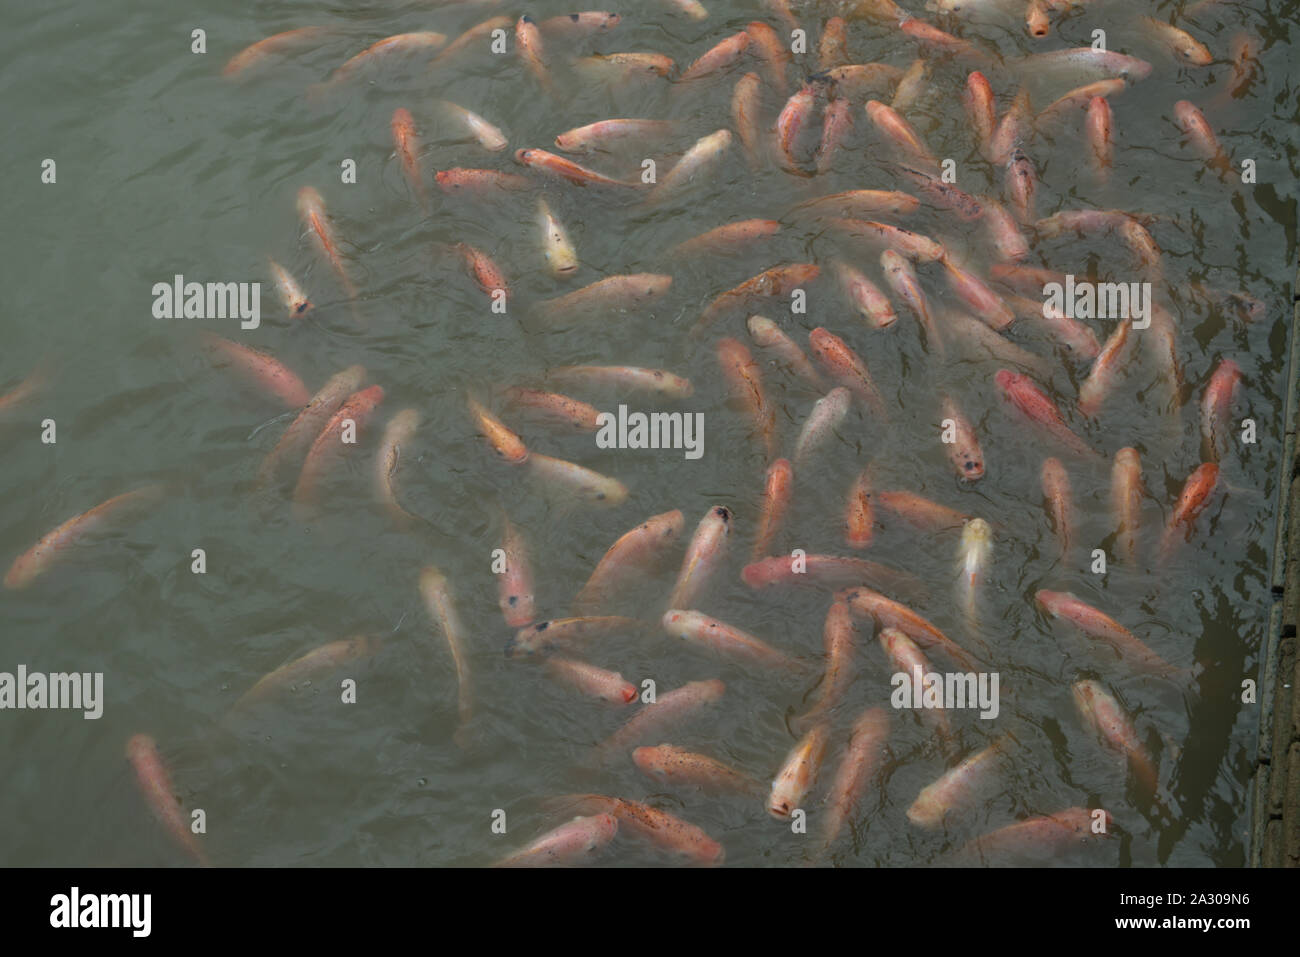 Shoal of goldfish or koi carp Stock Photo